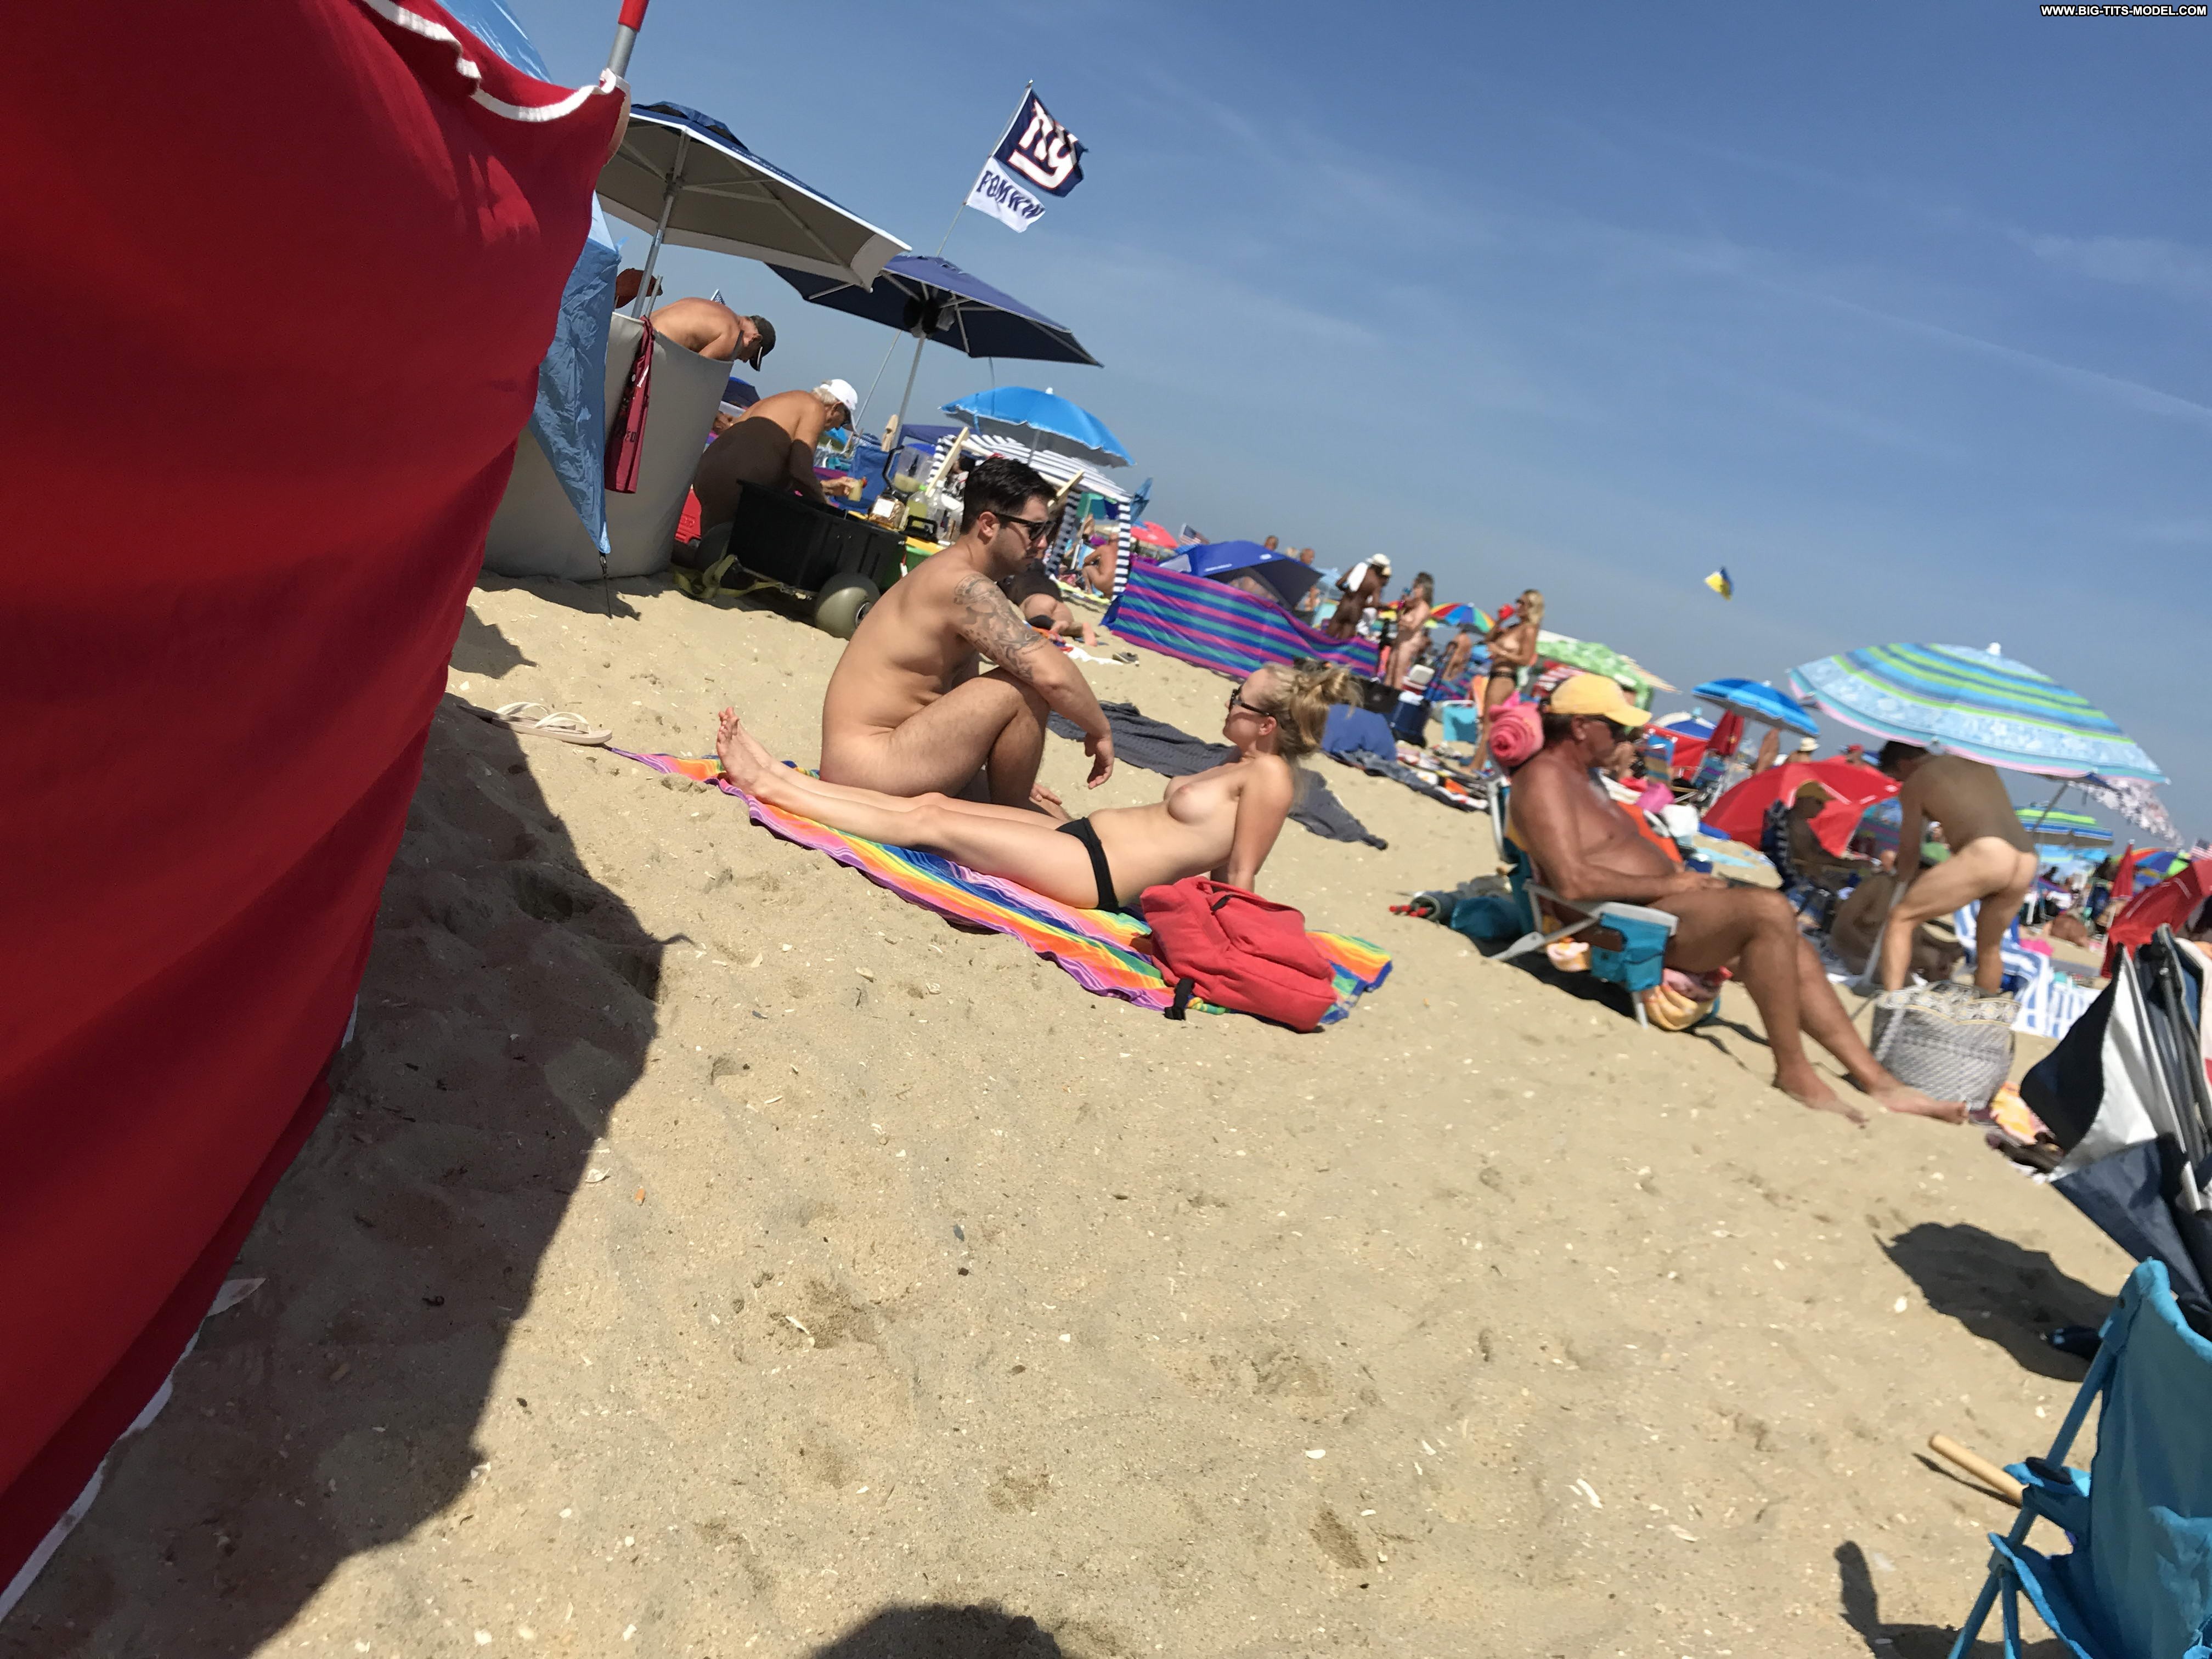 Miriam Naked Girls Caught Tanning Voyeur Nude Ass Beach Unaware